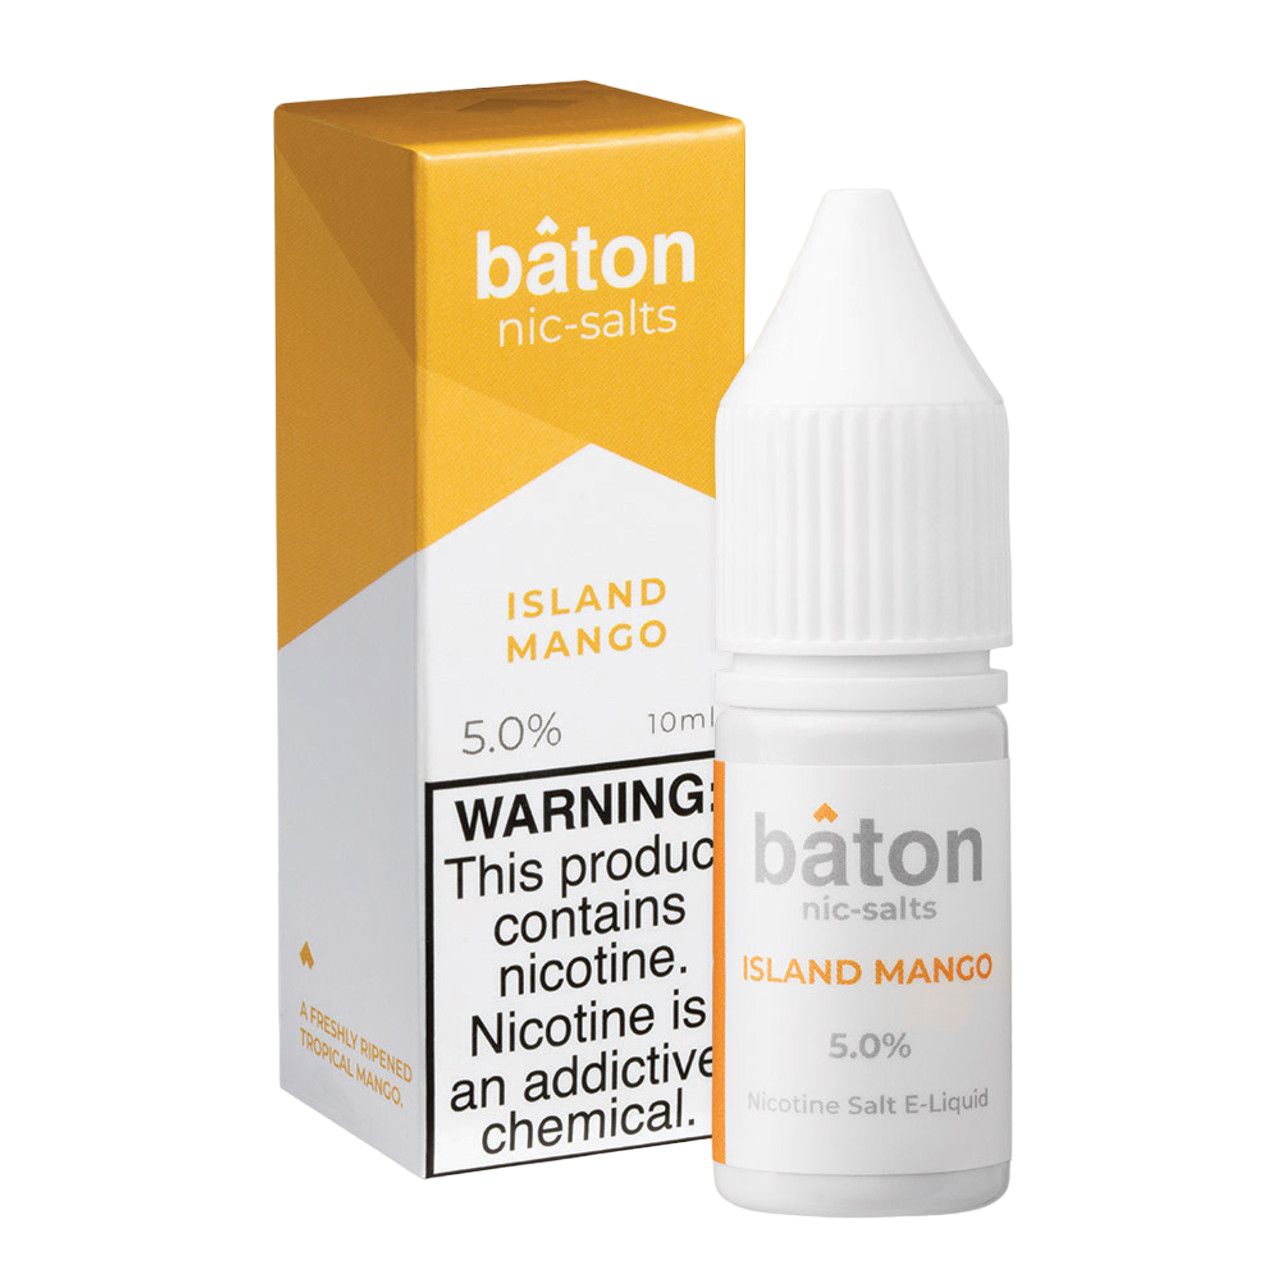 Baton Nic-Salts Nicotine Salt E-Liquid 10ML Island Mango 